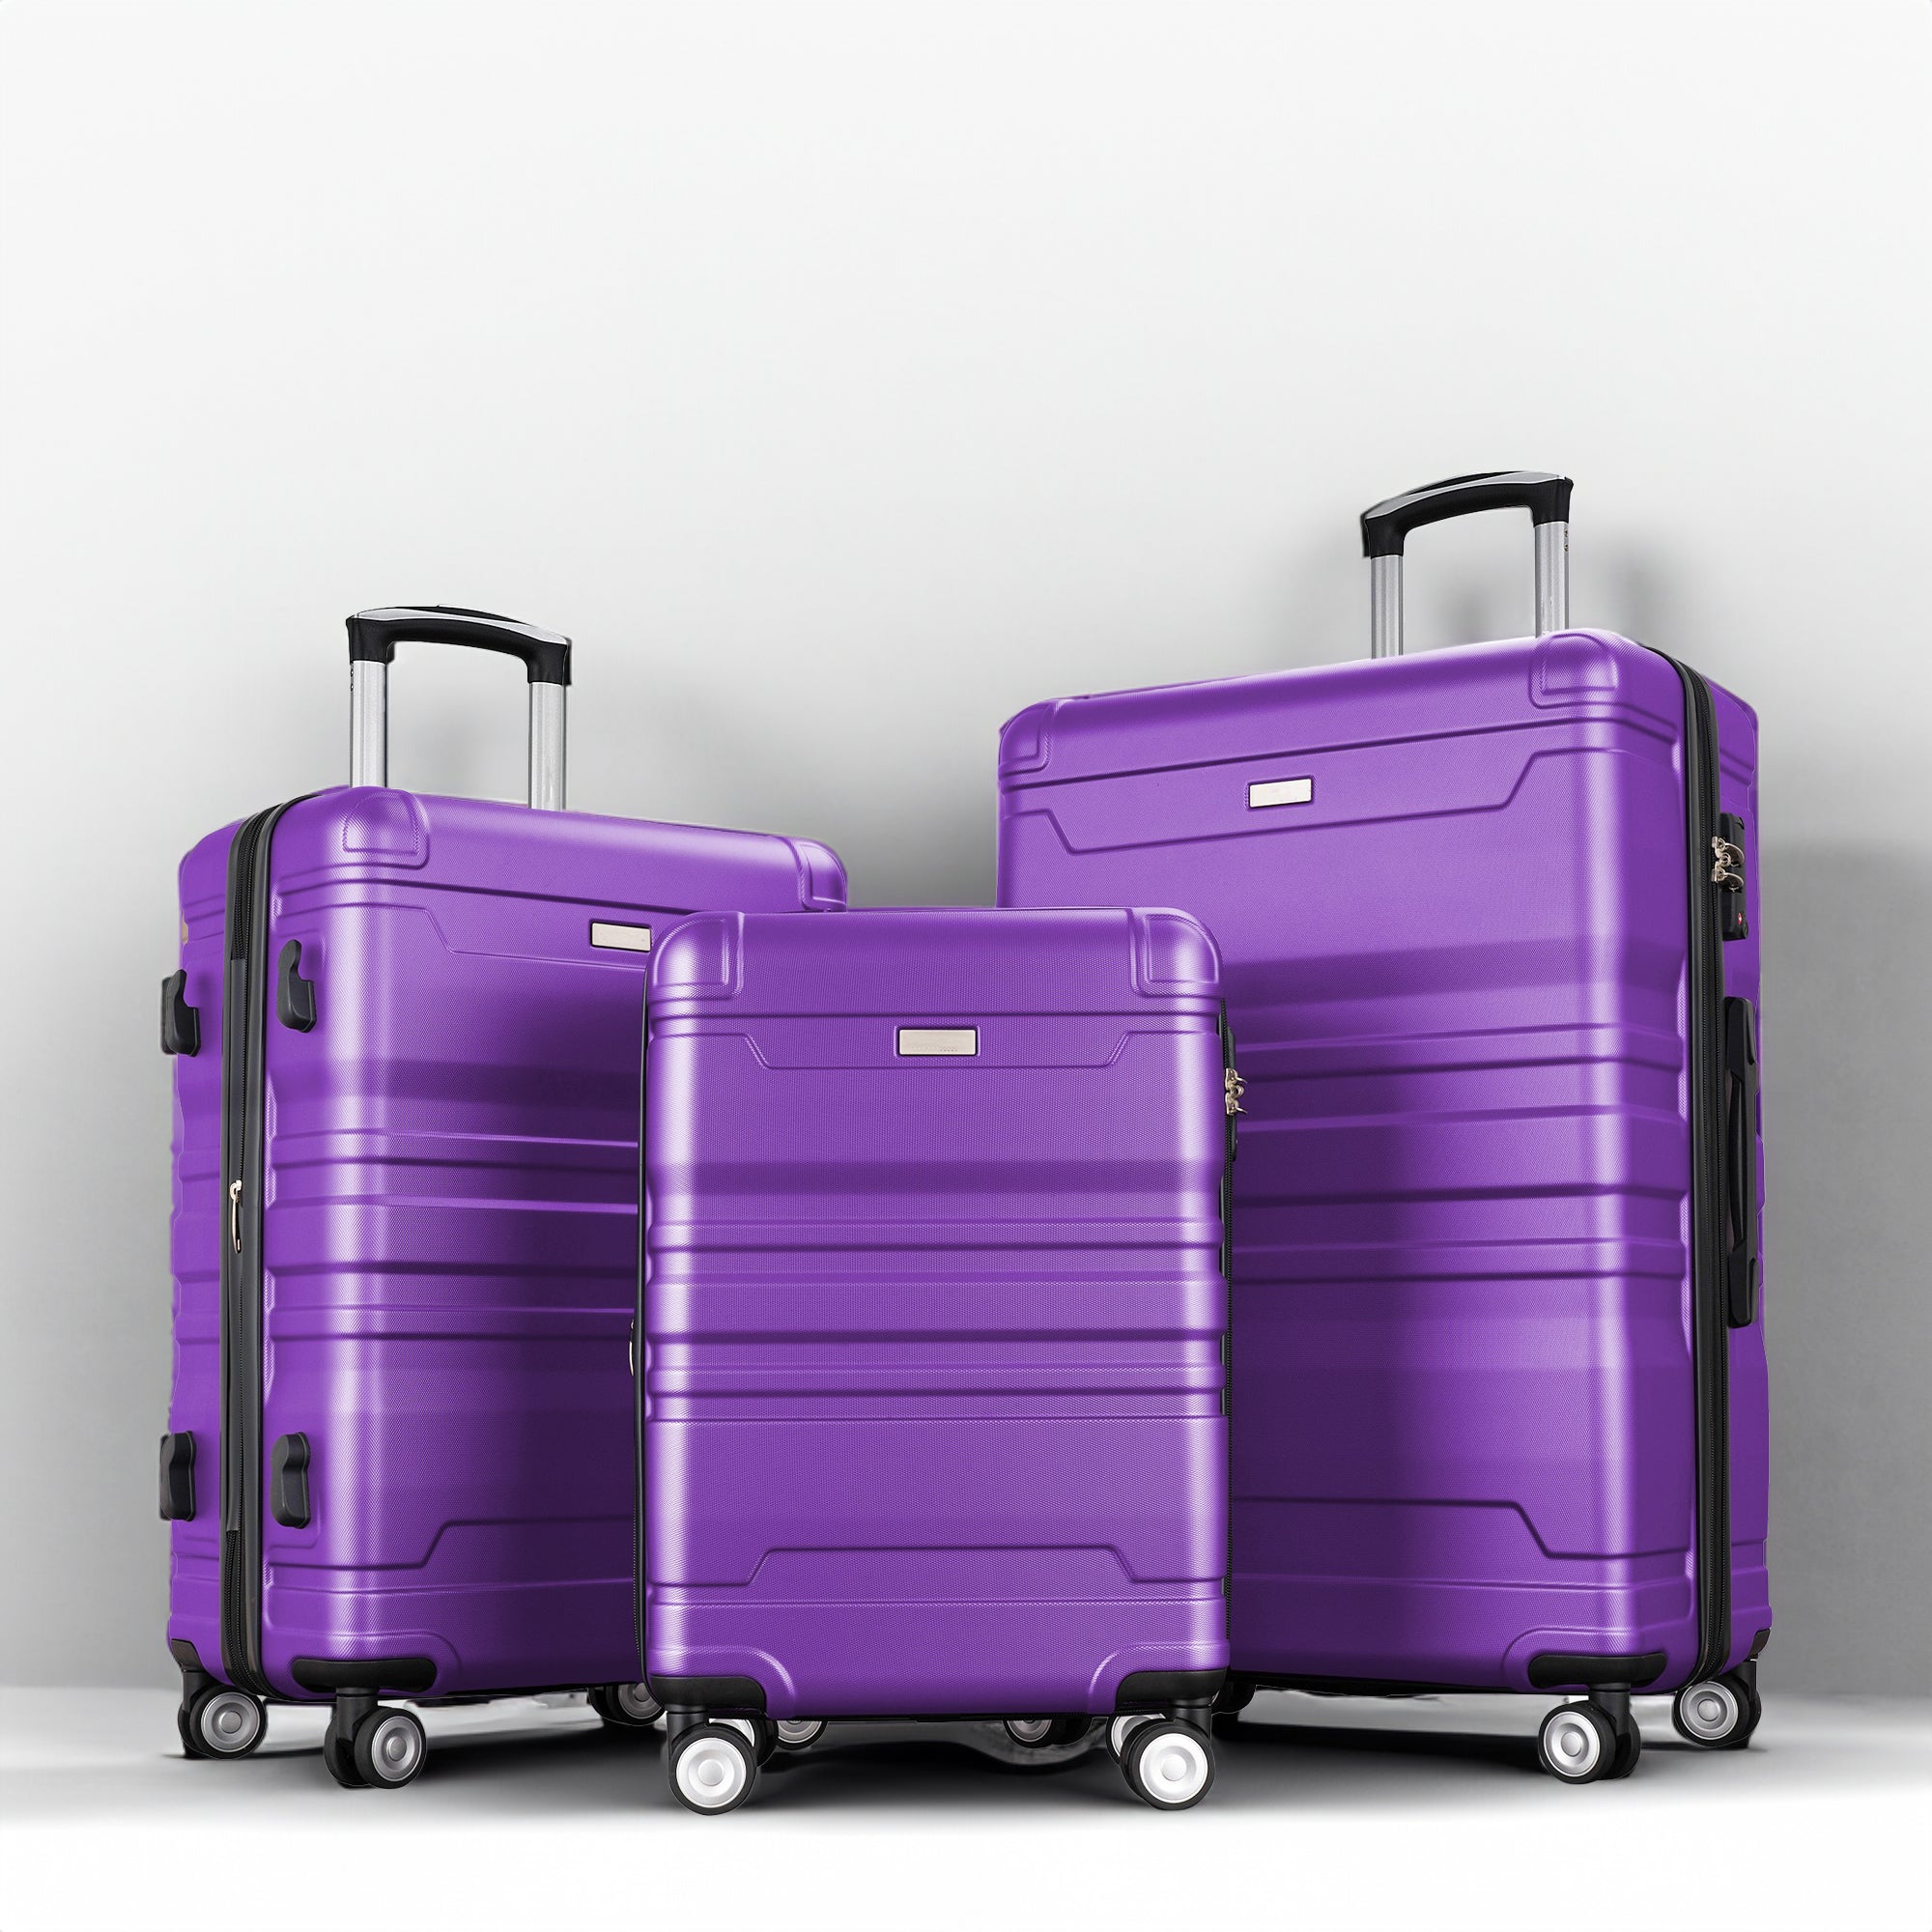 Luggage Sets New Model Expandable ABS Hardshell 3pcs Clearance Luggage (purple)